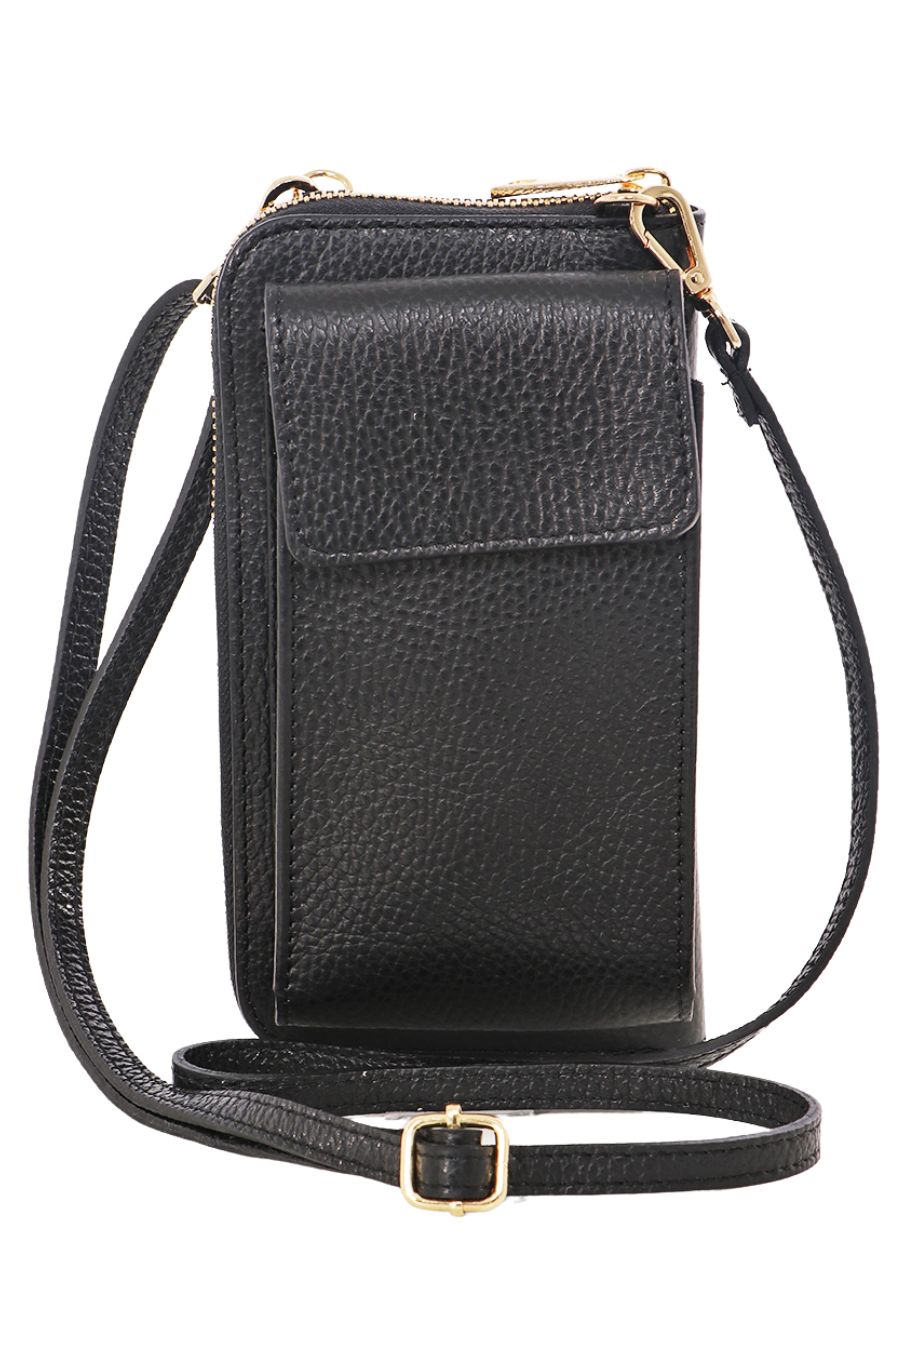 Black Italian Leather Mobile Phone Wallet Combo Bag